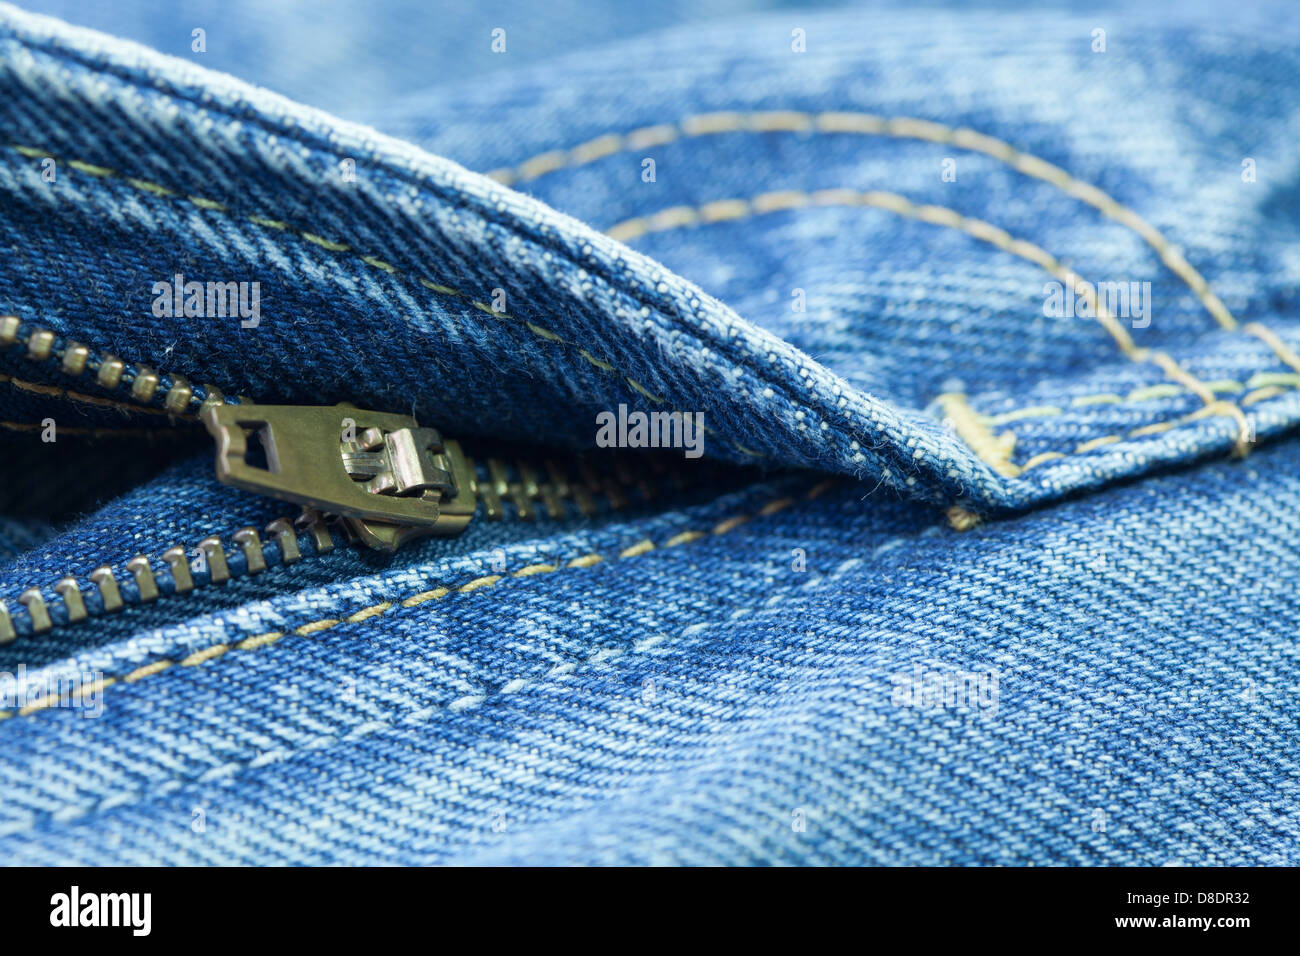 zip in jean pant Stock Photo - Alamy